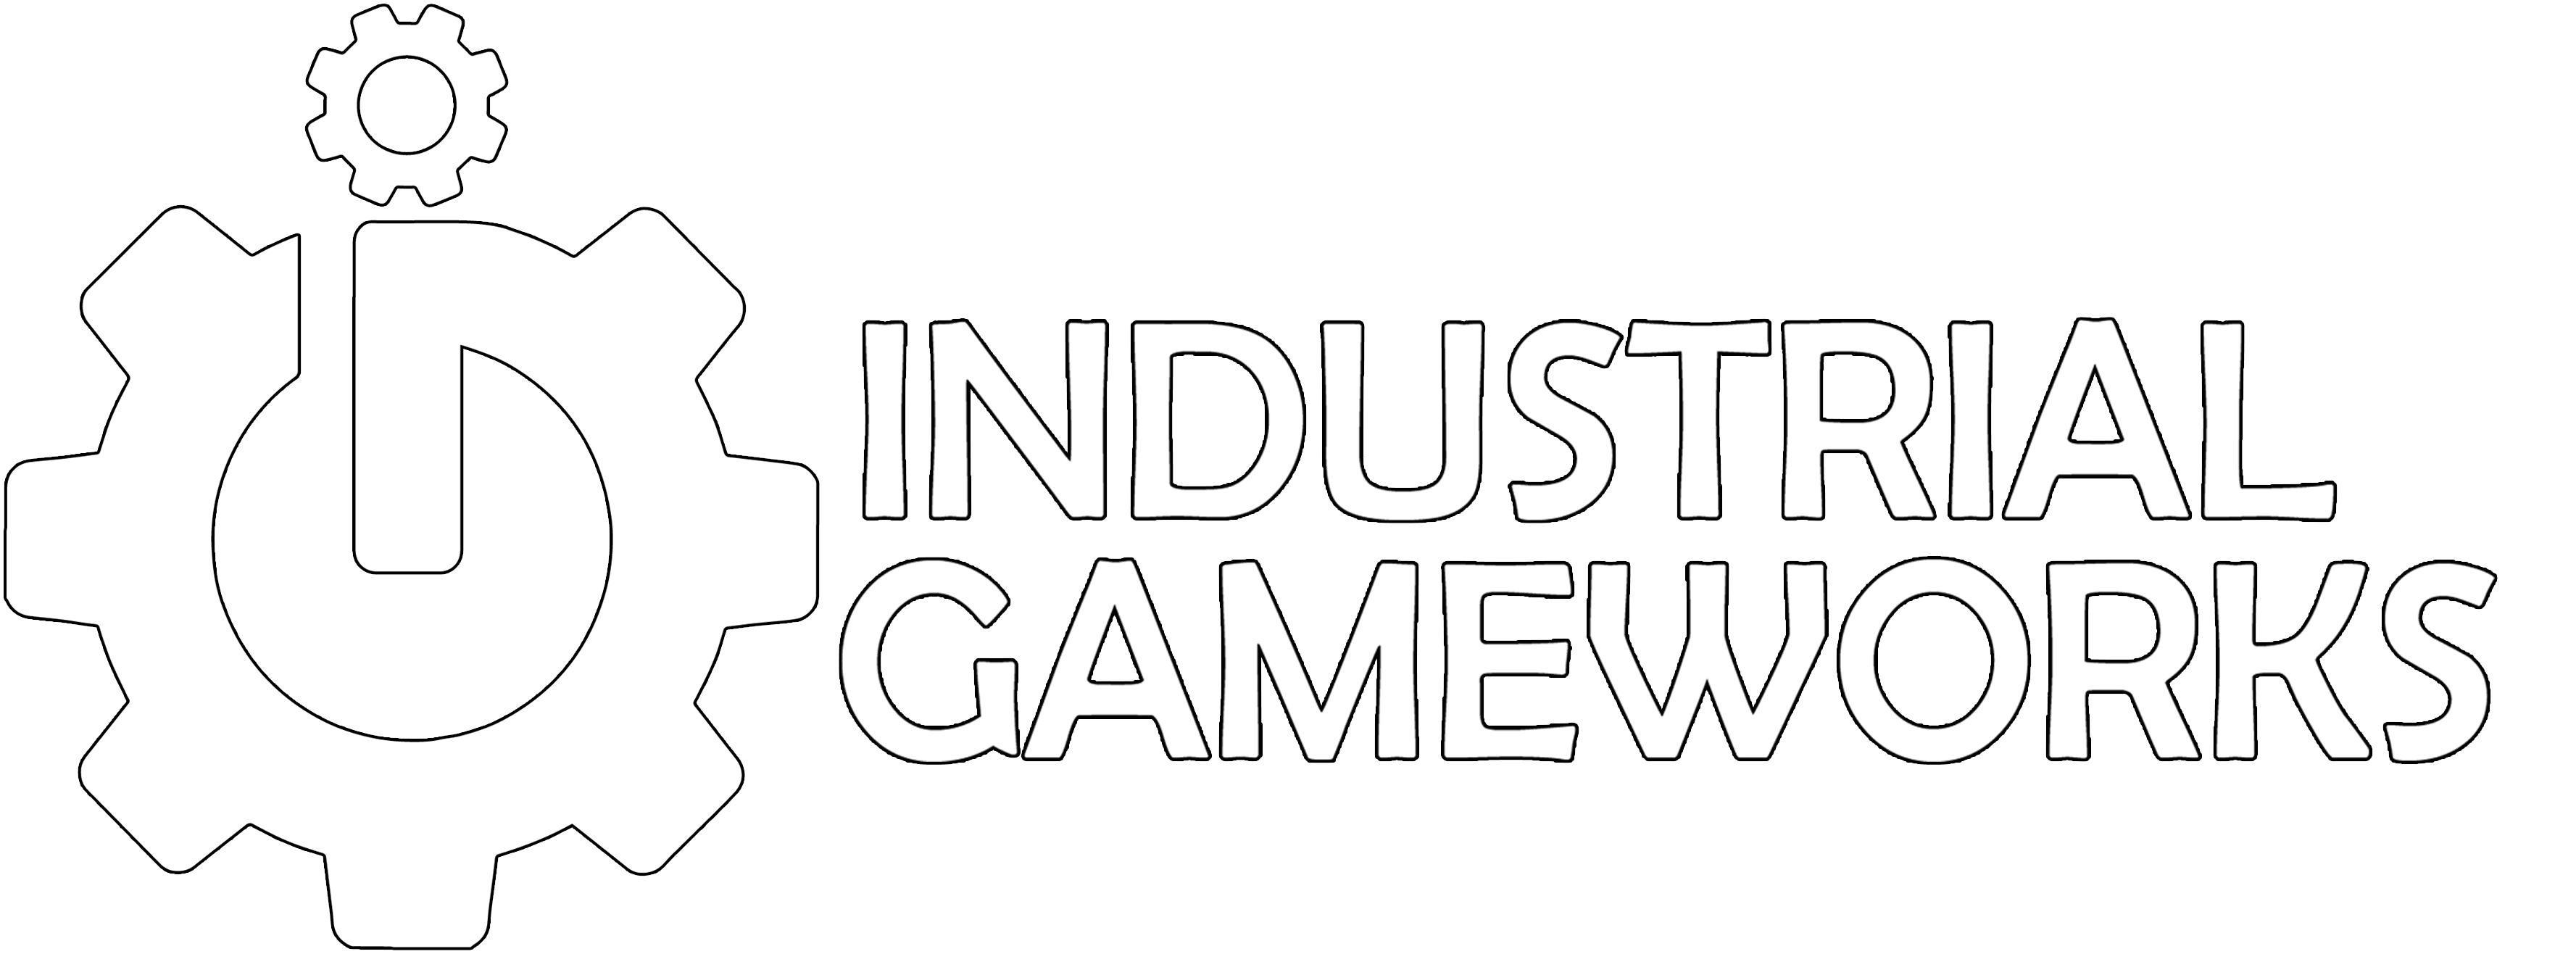 Industrial Gameworks